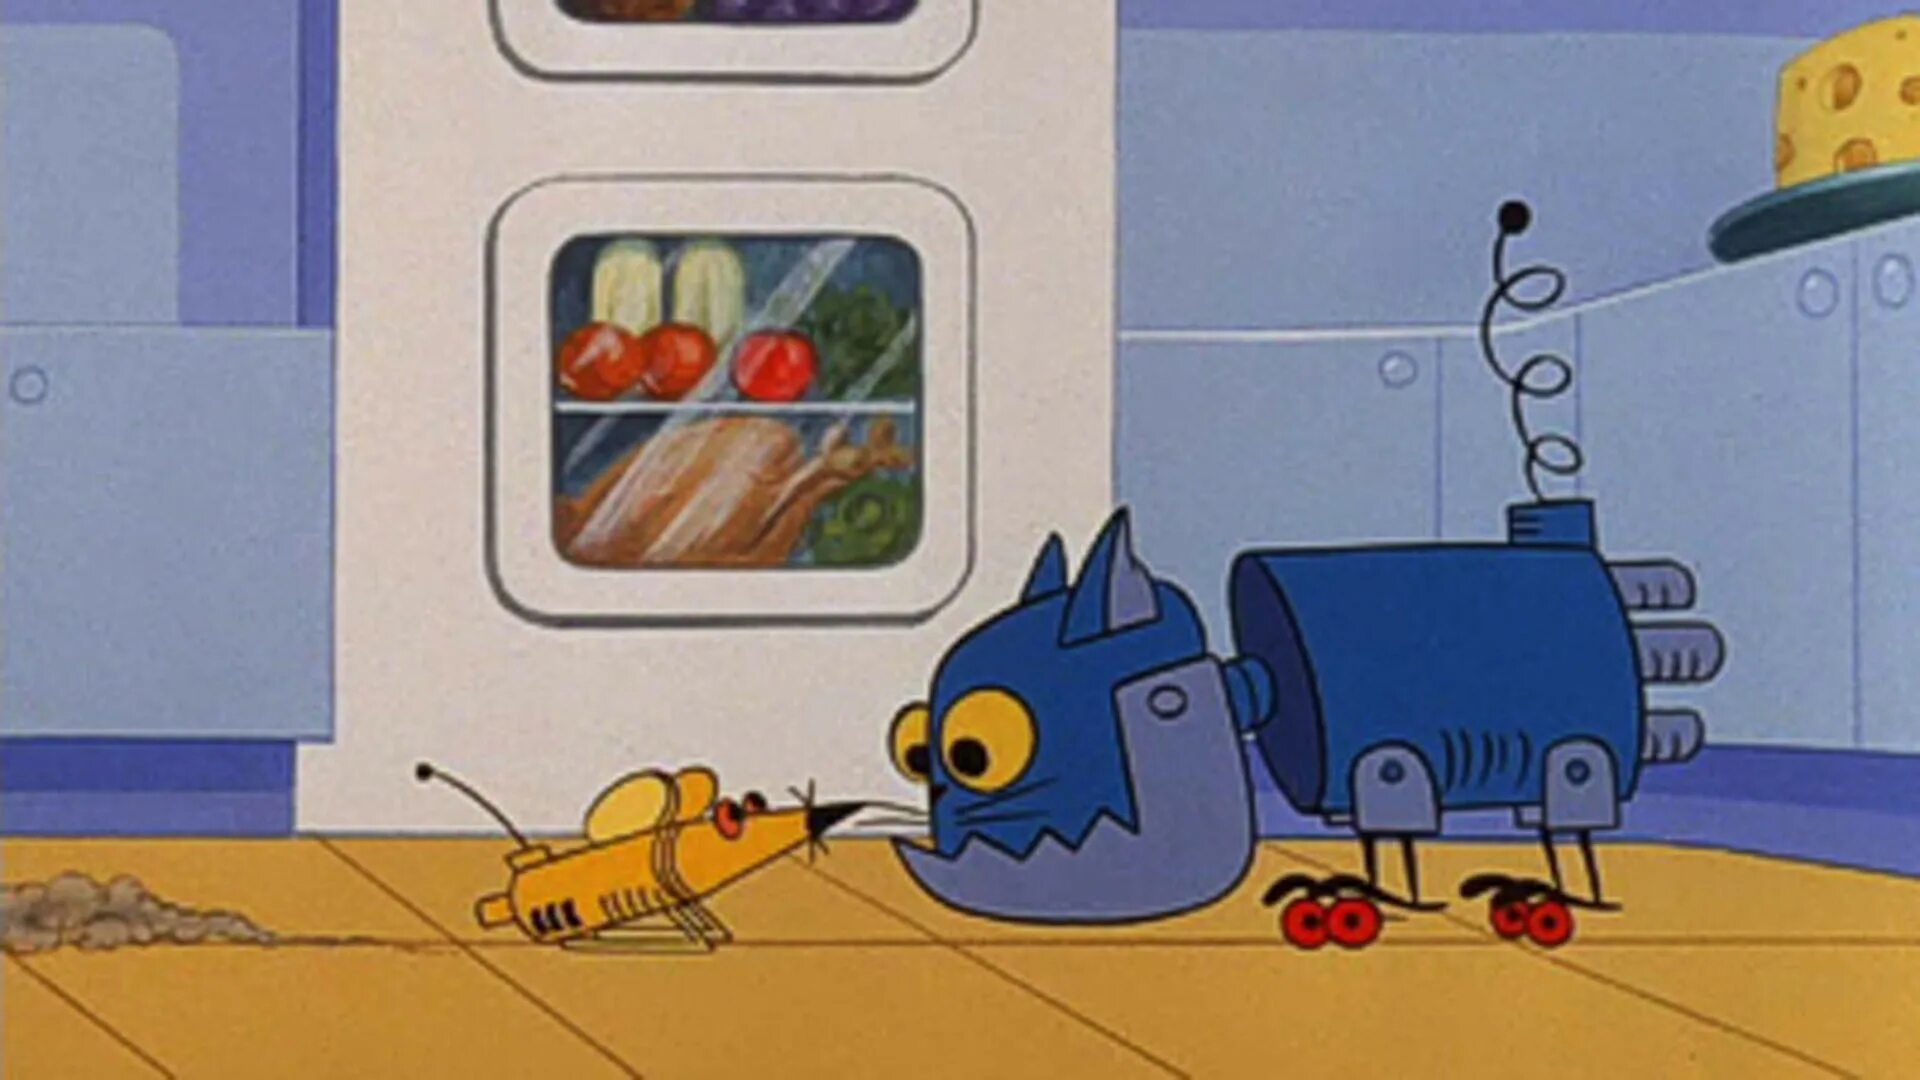 3 кота про робота. Том и Джерри робот. Том и Джерри робот мышь. Том и Джерри Робокот. Кот робот из том и Джерри.